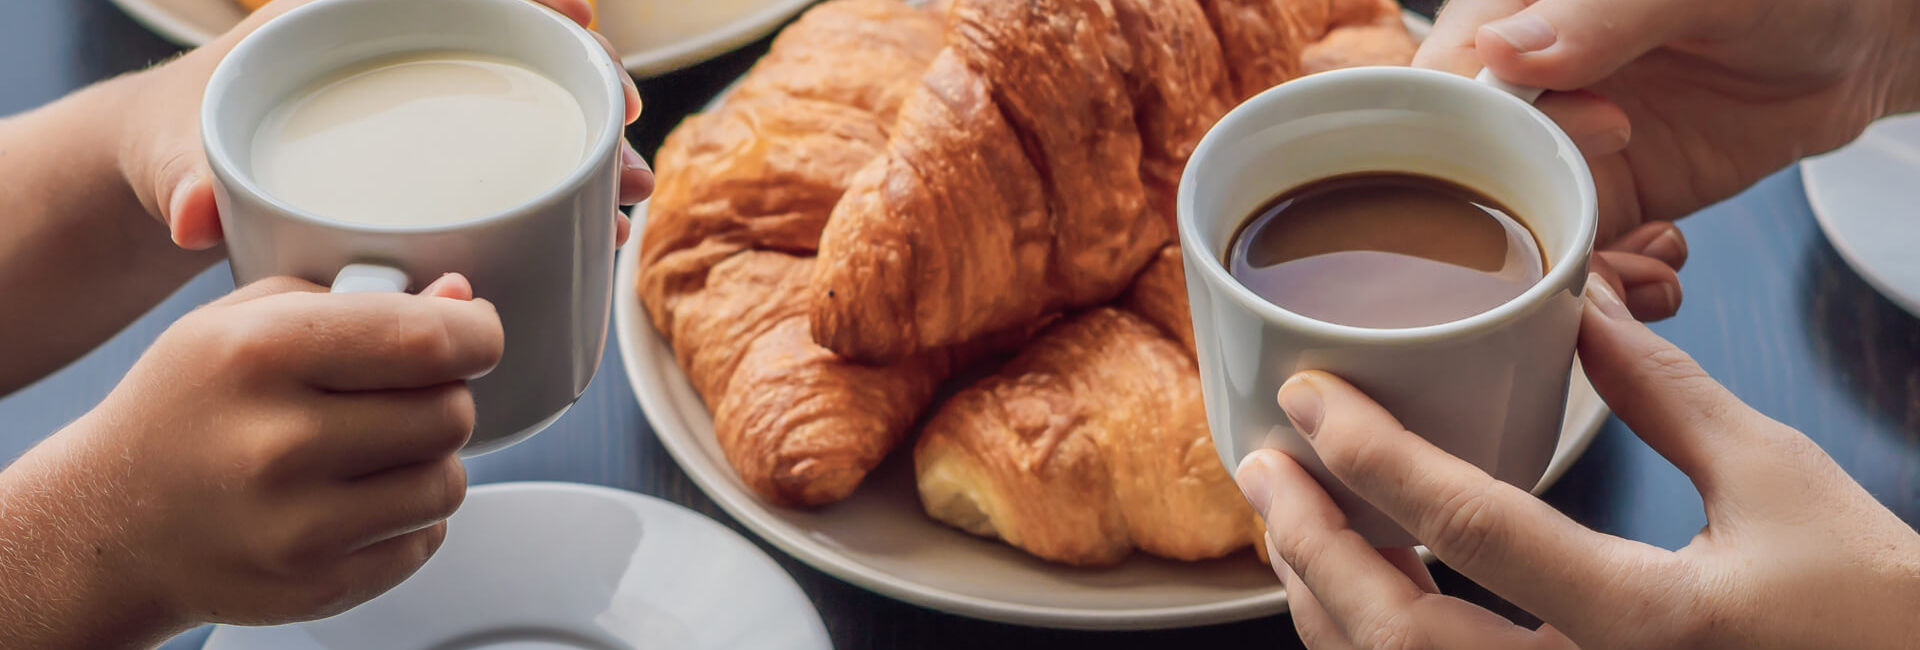 Coffee and croissants - Gasterij 't Karrewiel